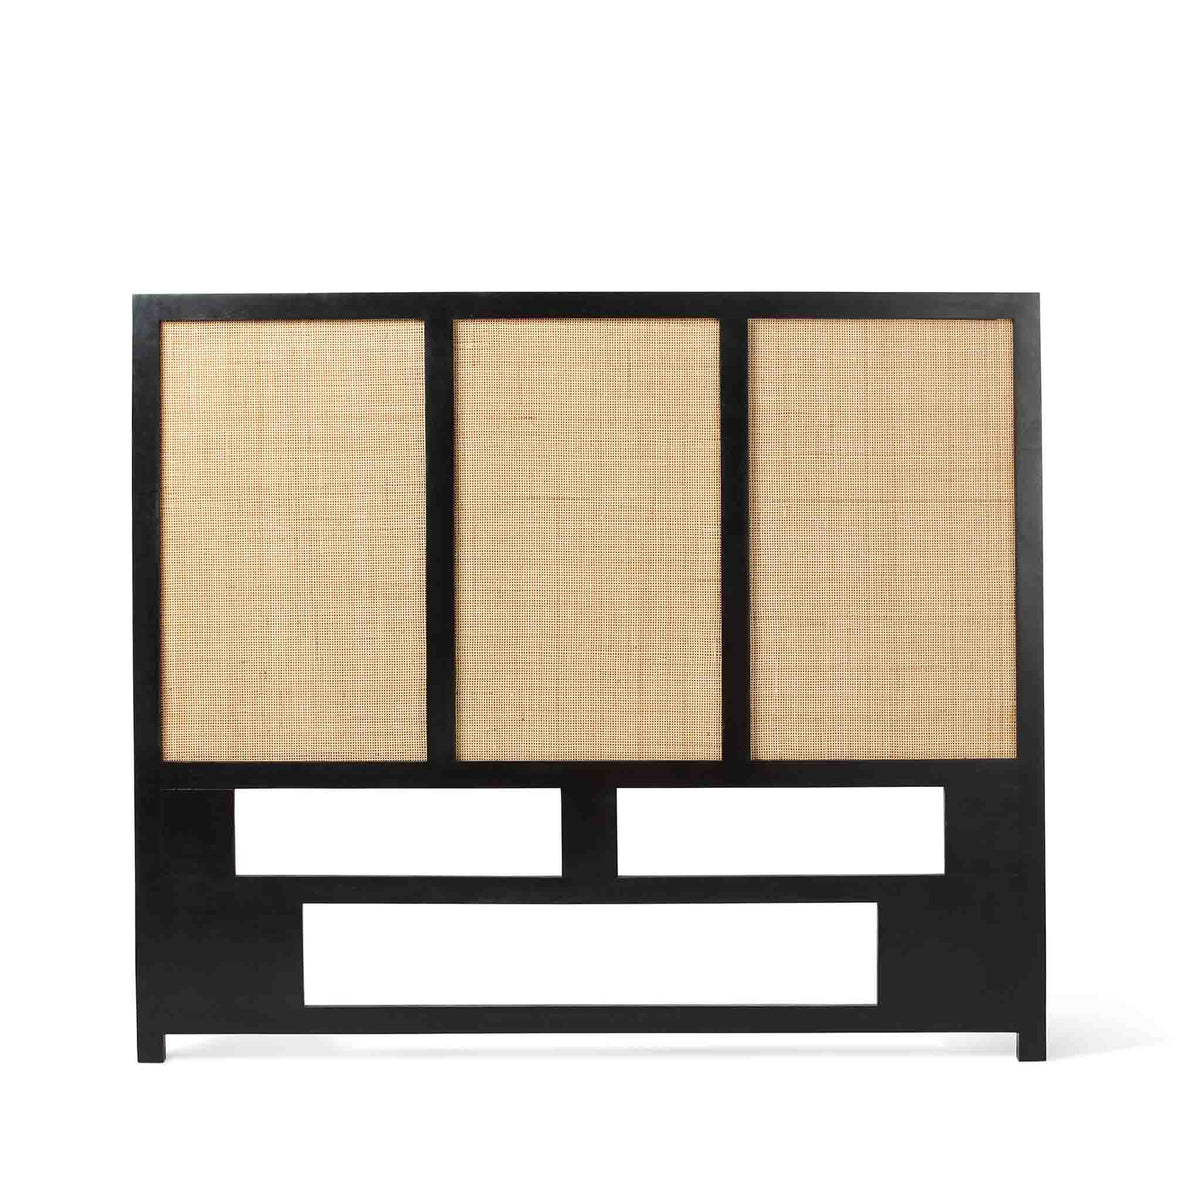 Venti Black Mango Wood & Cane Headboard from Roseland Furniture